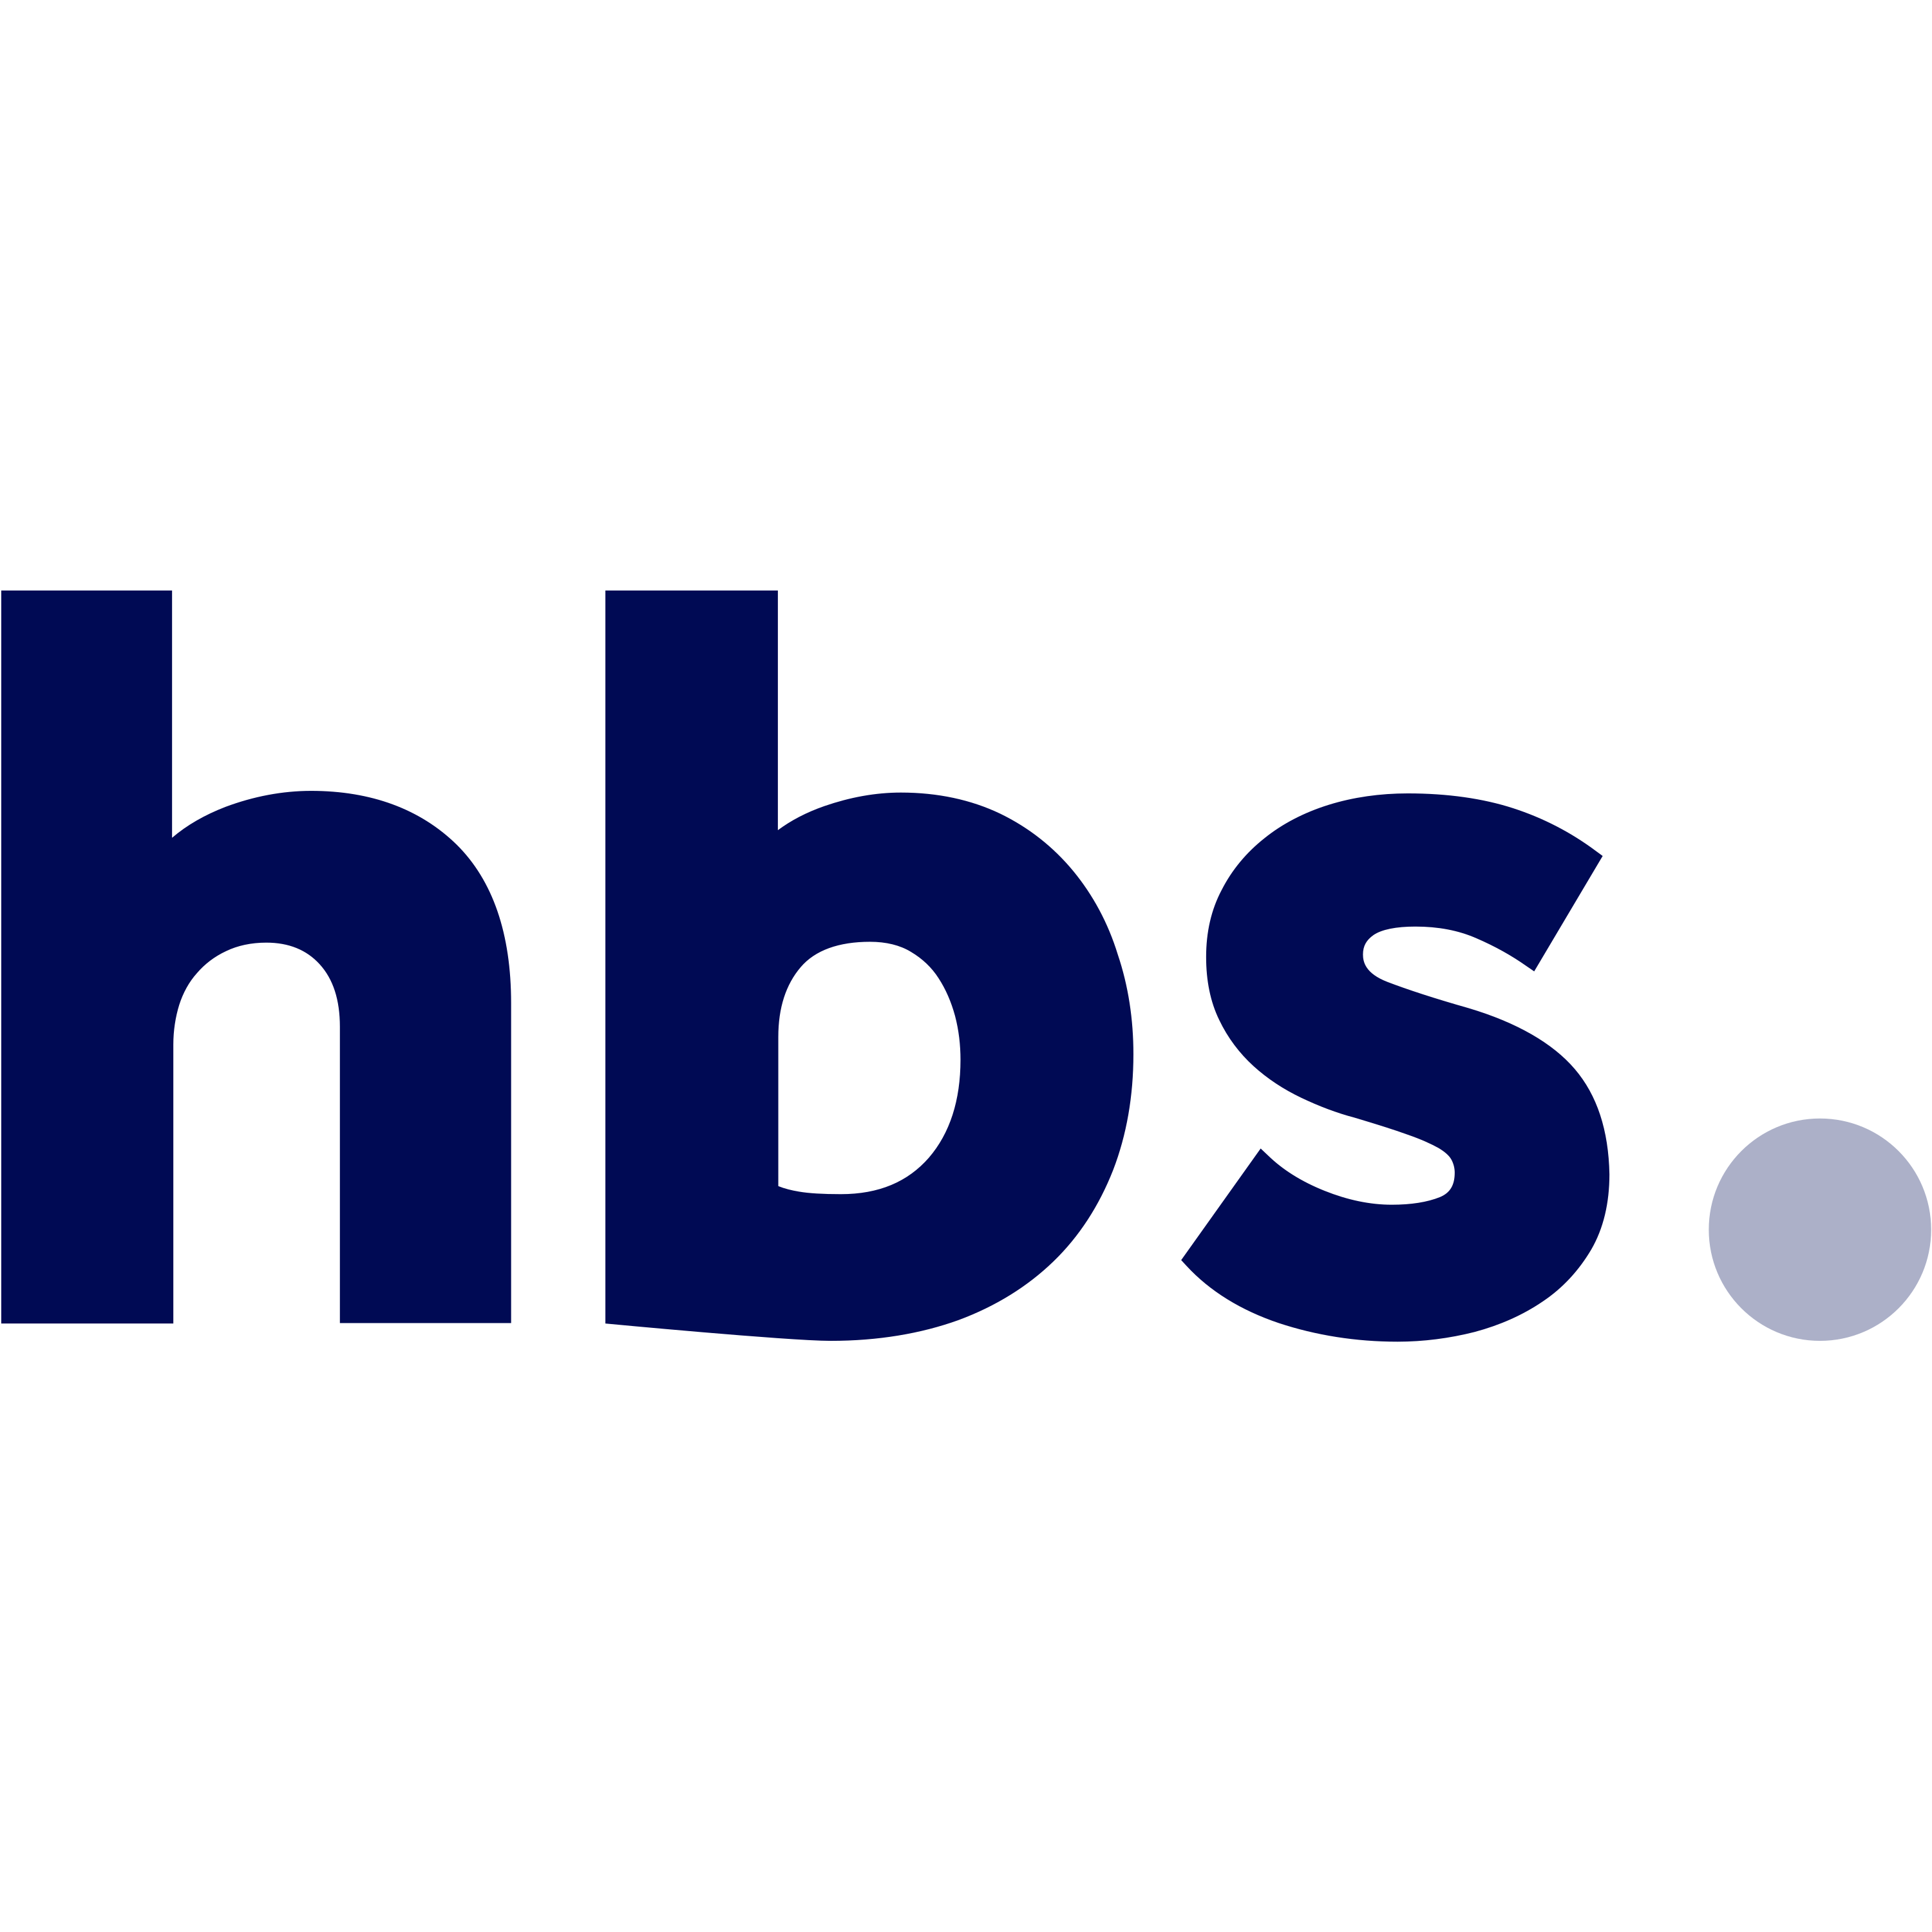 Host Broadcast Services Logo  Transparent Gallery